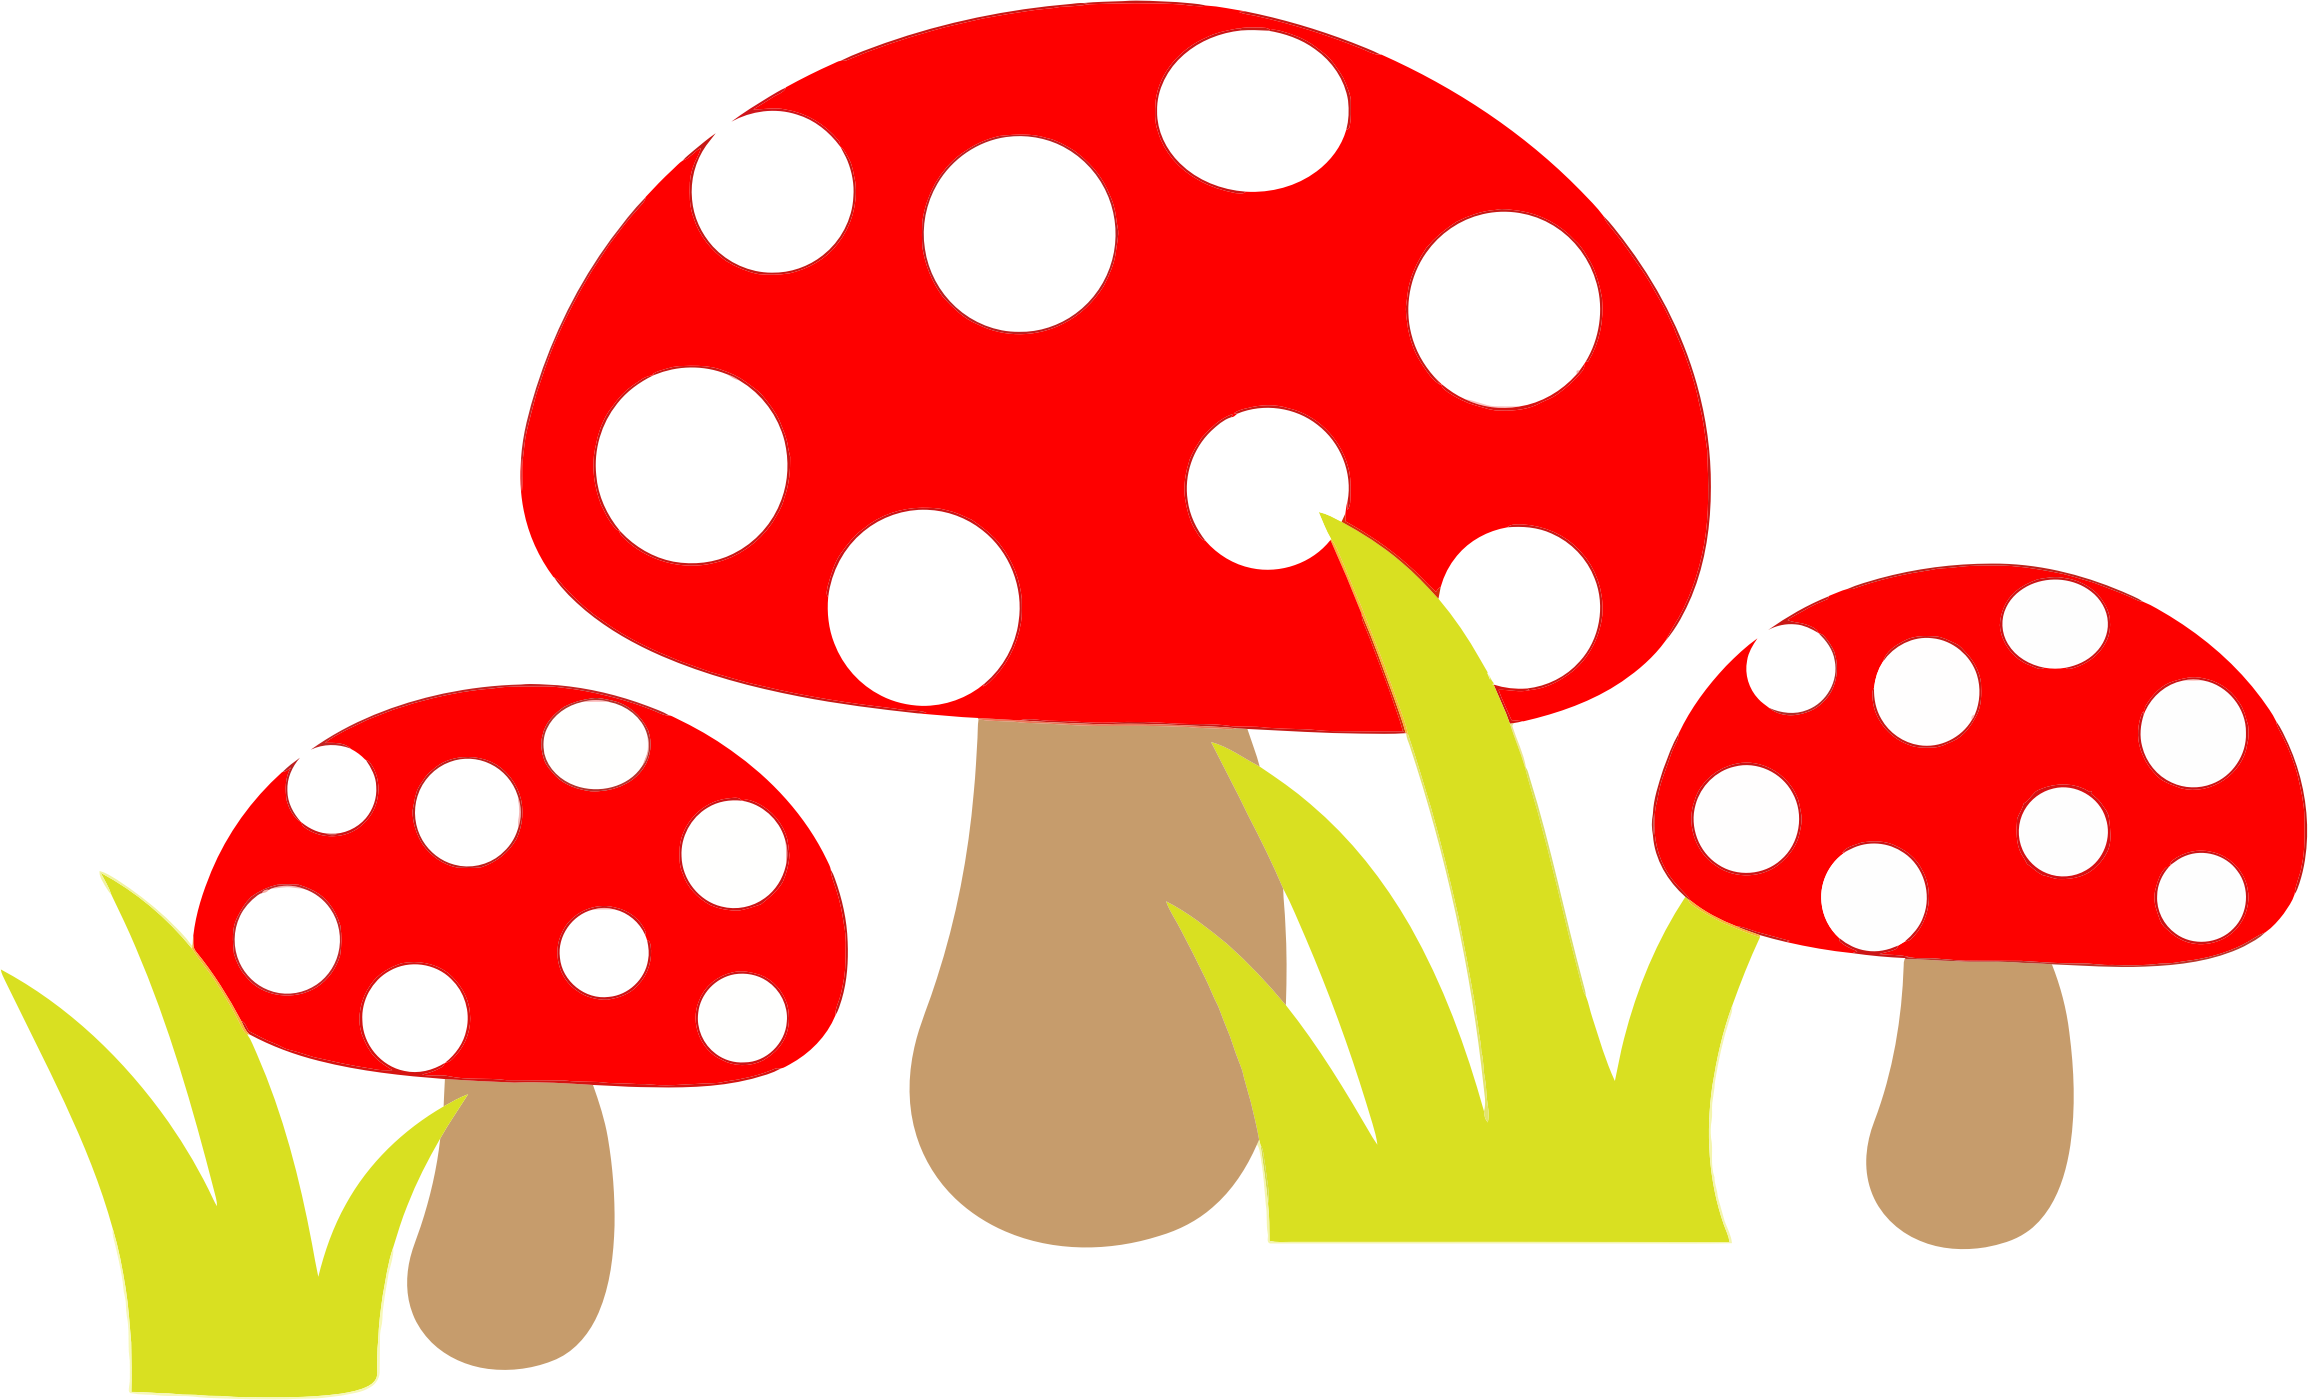 Mushrooms clipart toadstool. Toadstools big image png